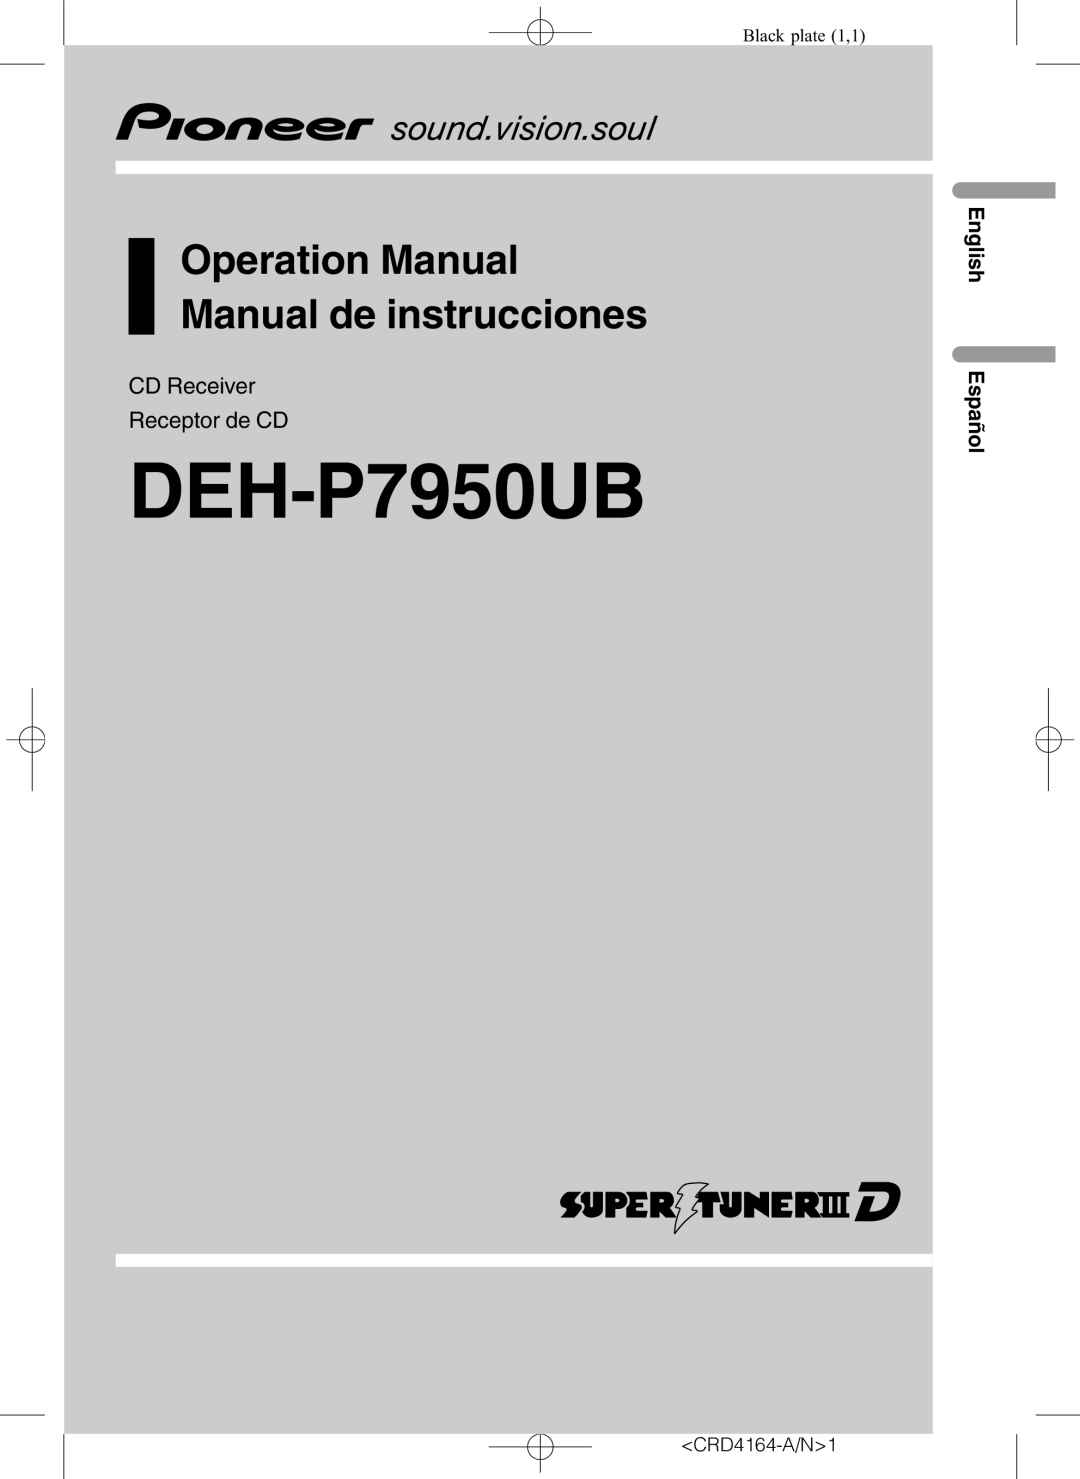 Pioneer DEH-P7950UB operation manual CD Receiver Receptor de CD, English Español, Black plate 1,1 